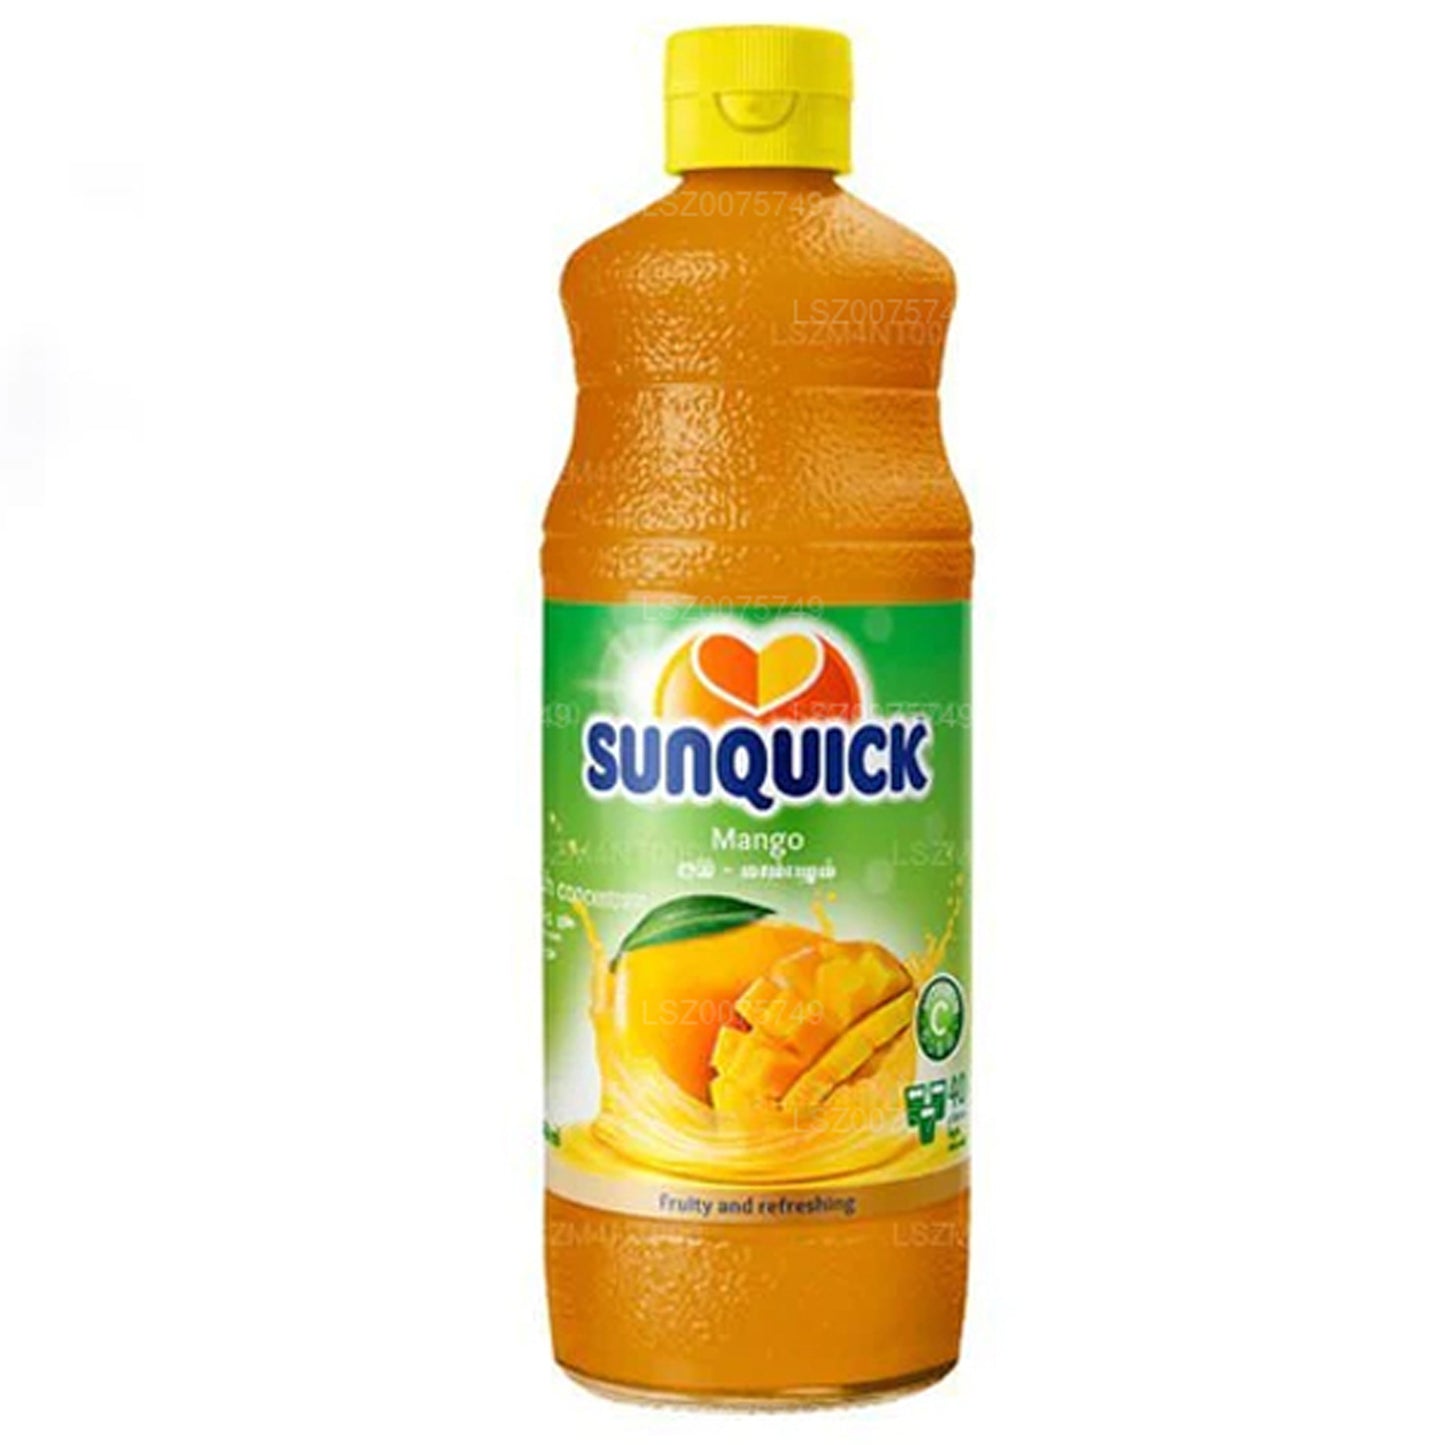 Sunquick Mango (700ml)